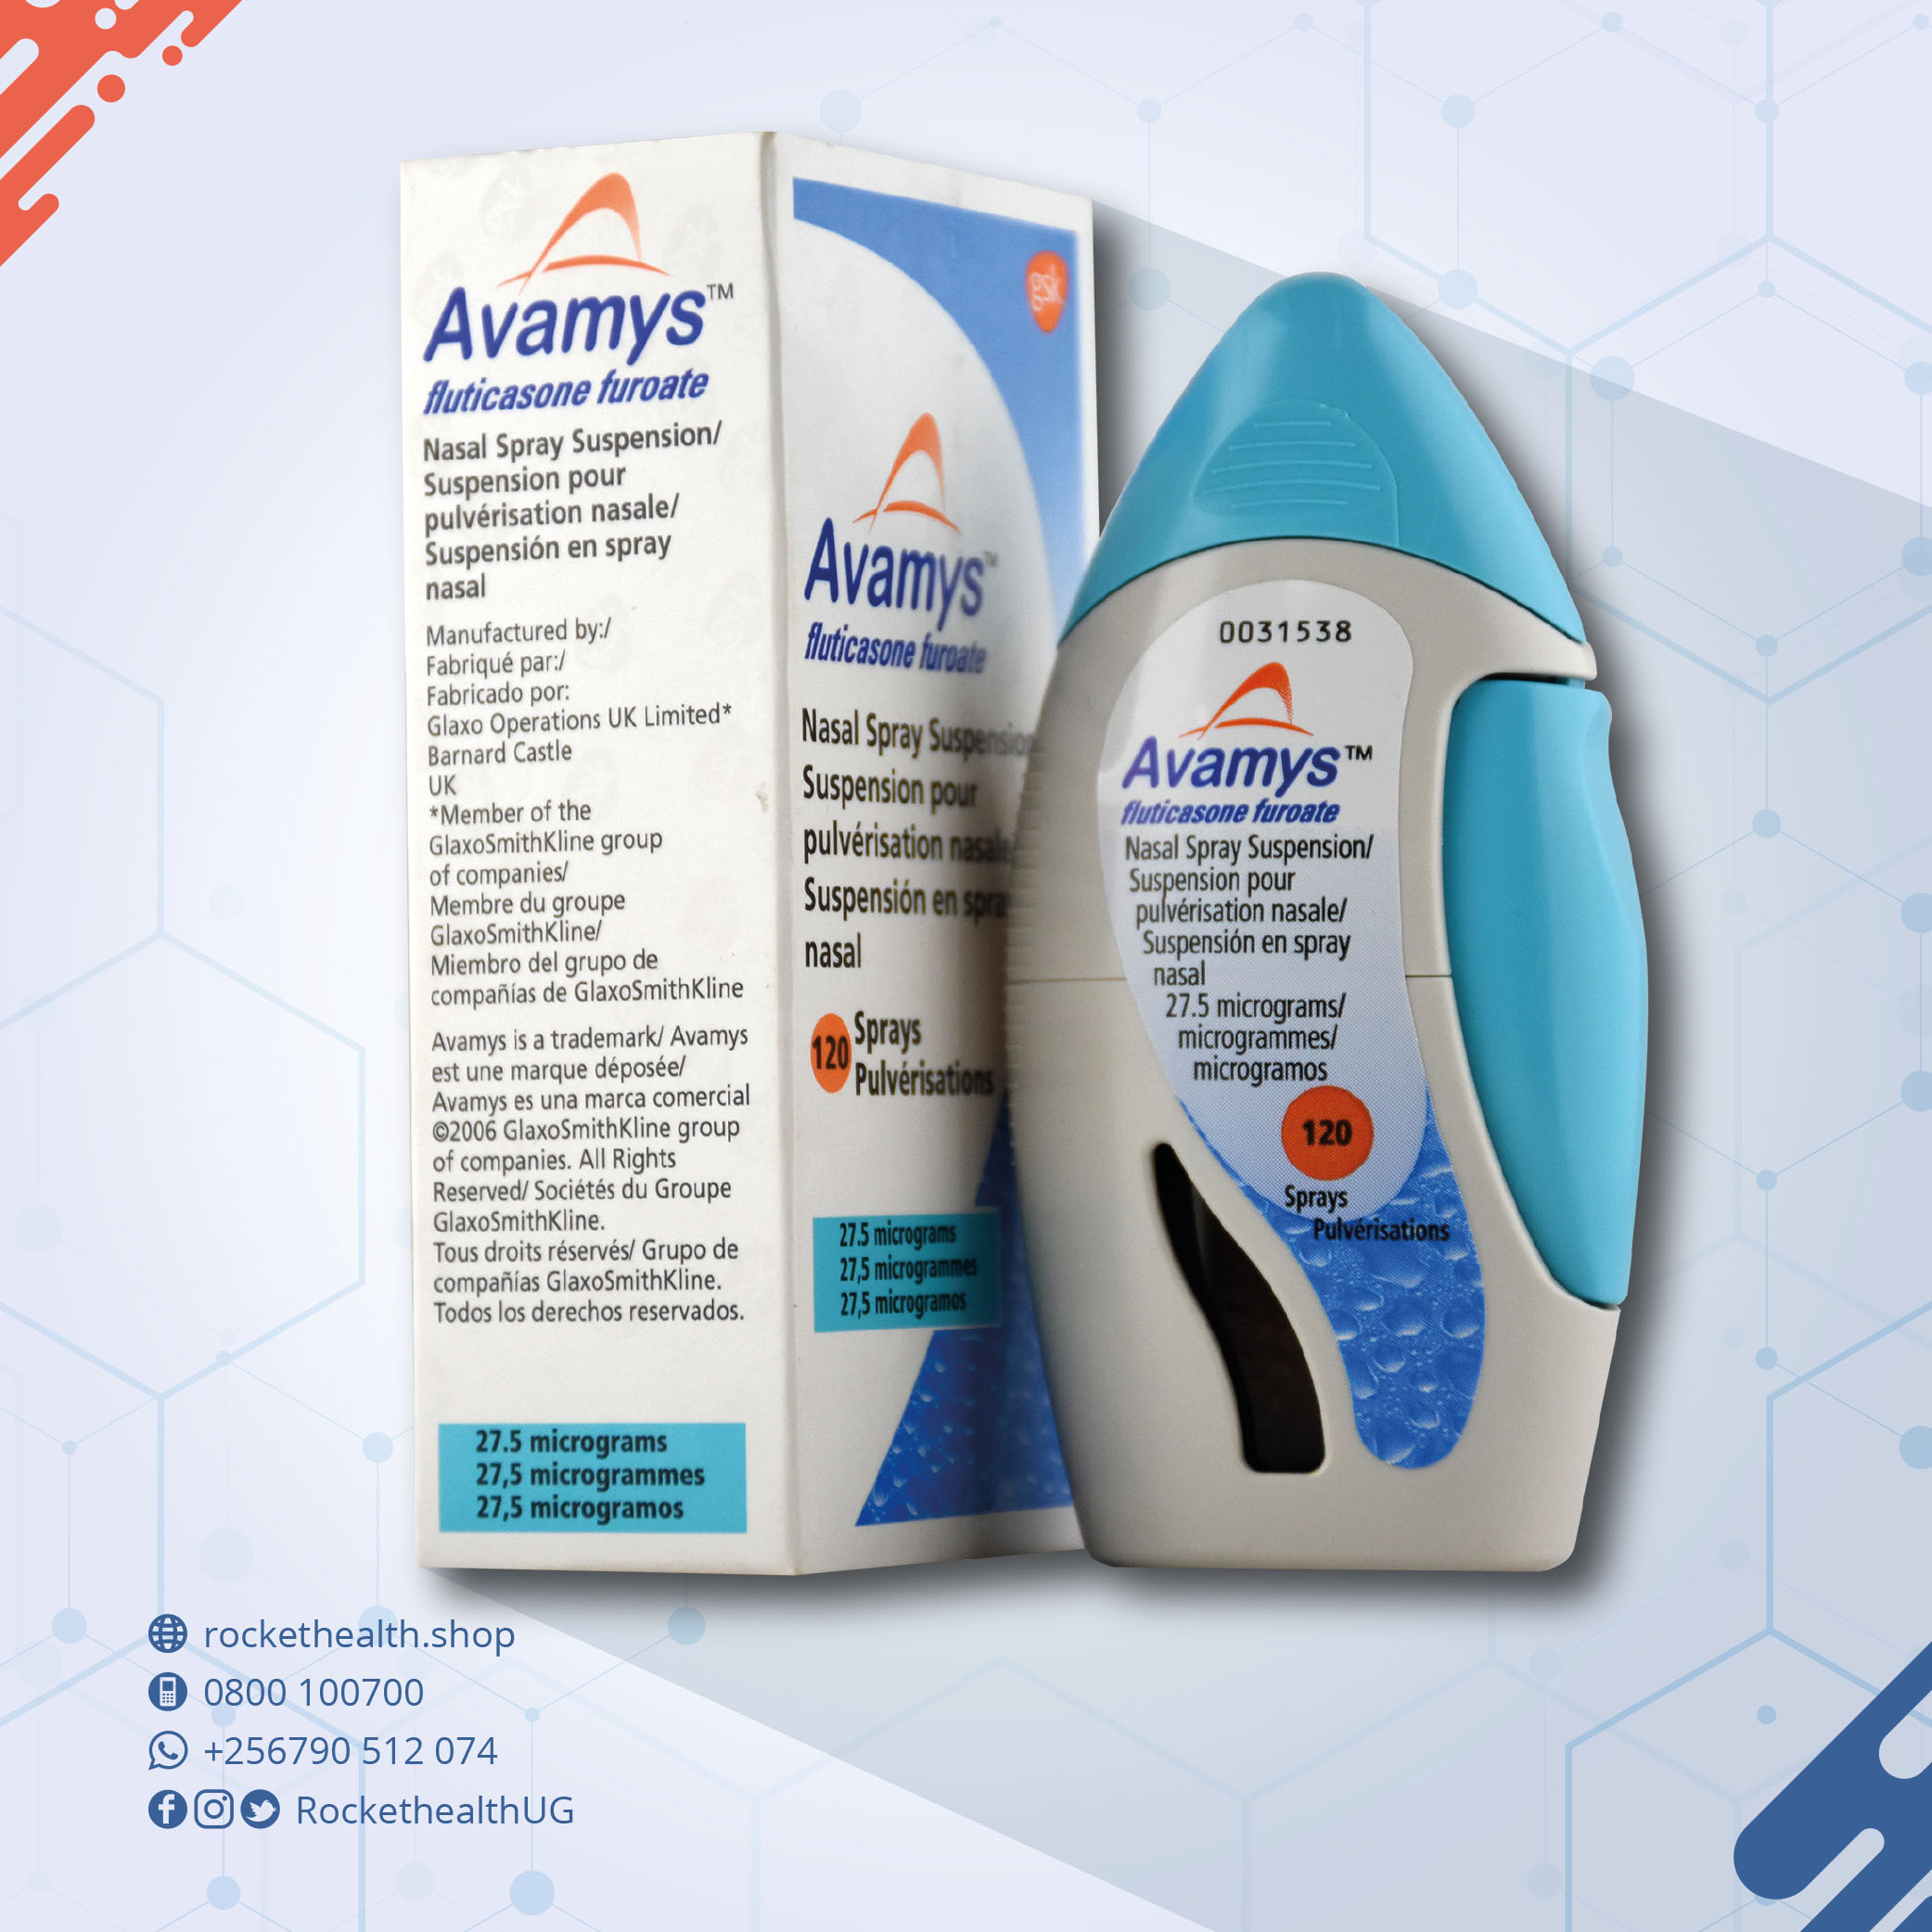 avamys nasal spray for sinus infection